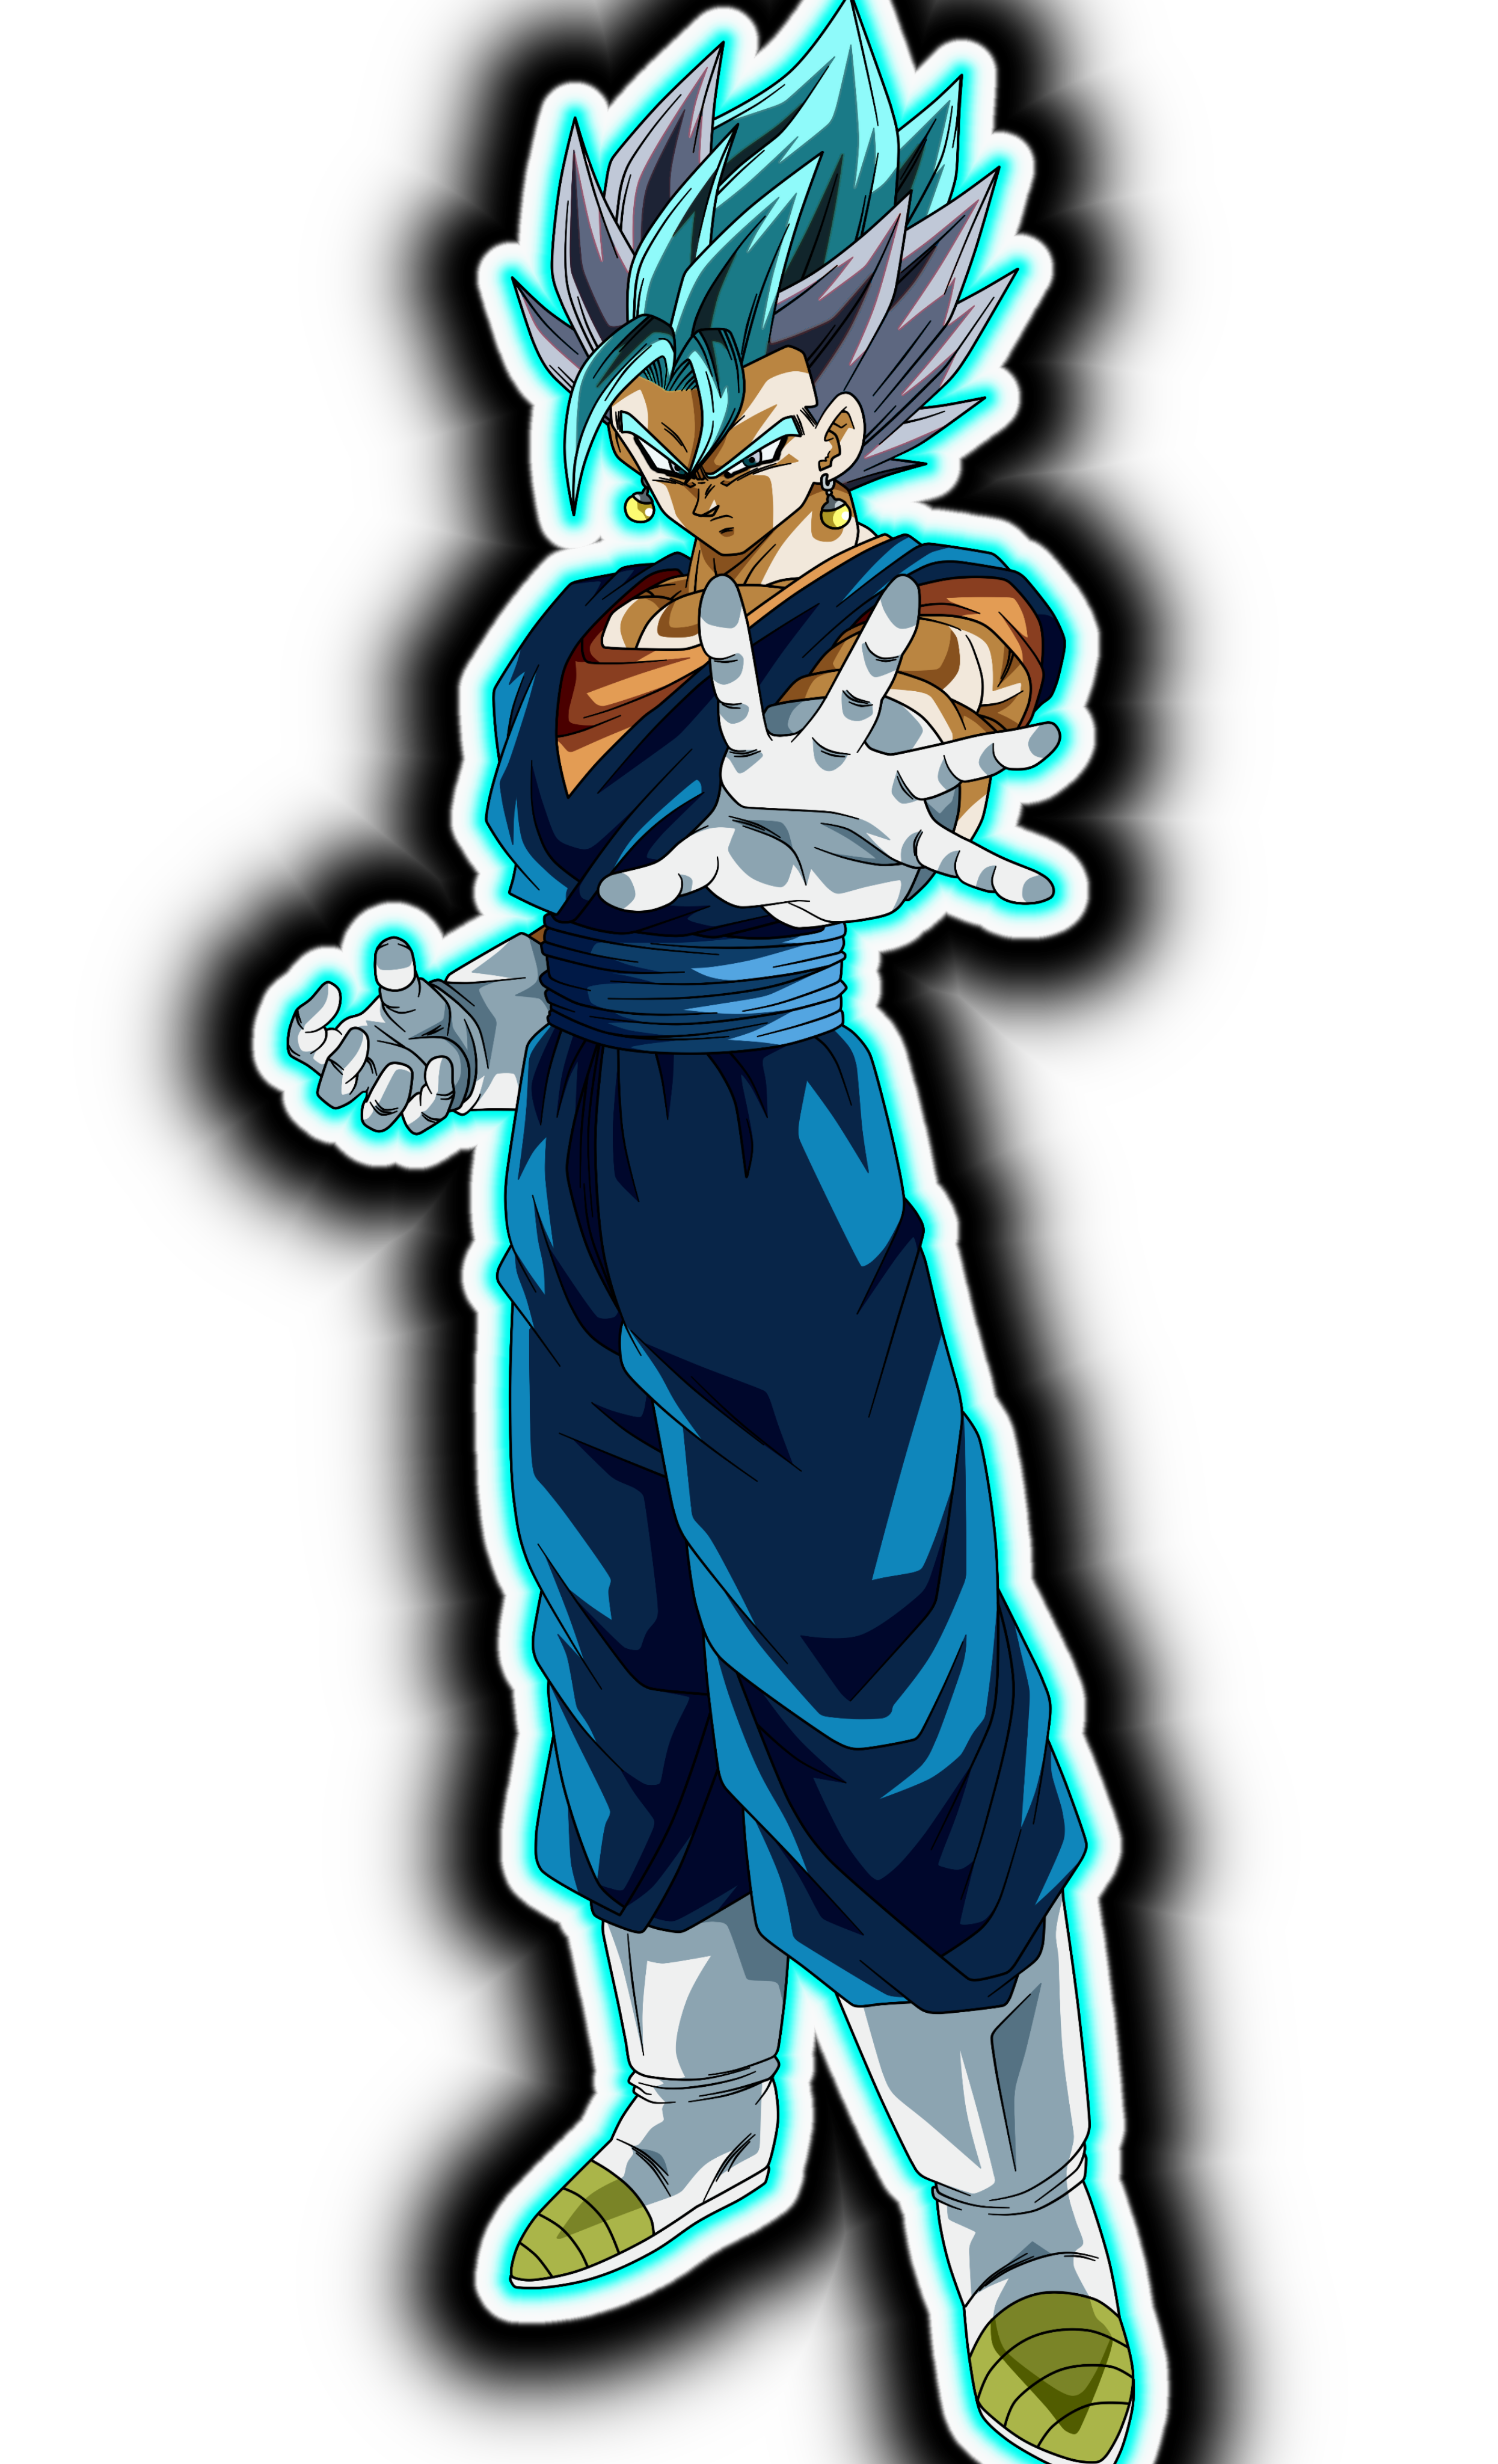 Goku SSJ BLUE UNIVERSAL by xchs on DeviantArt